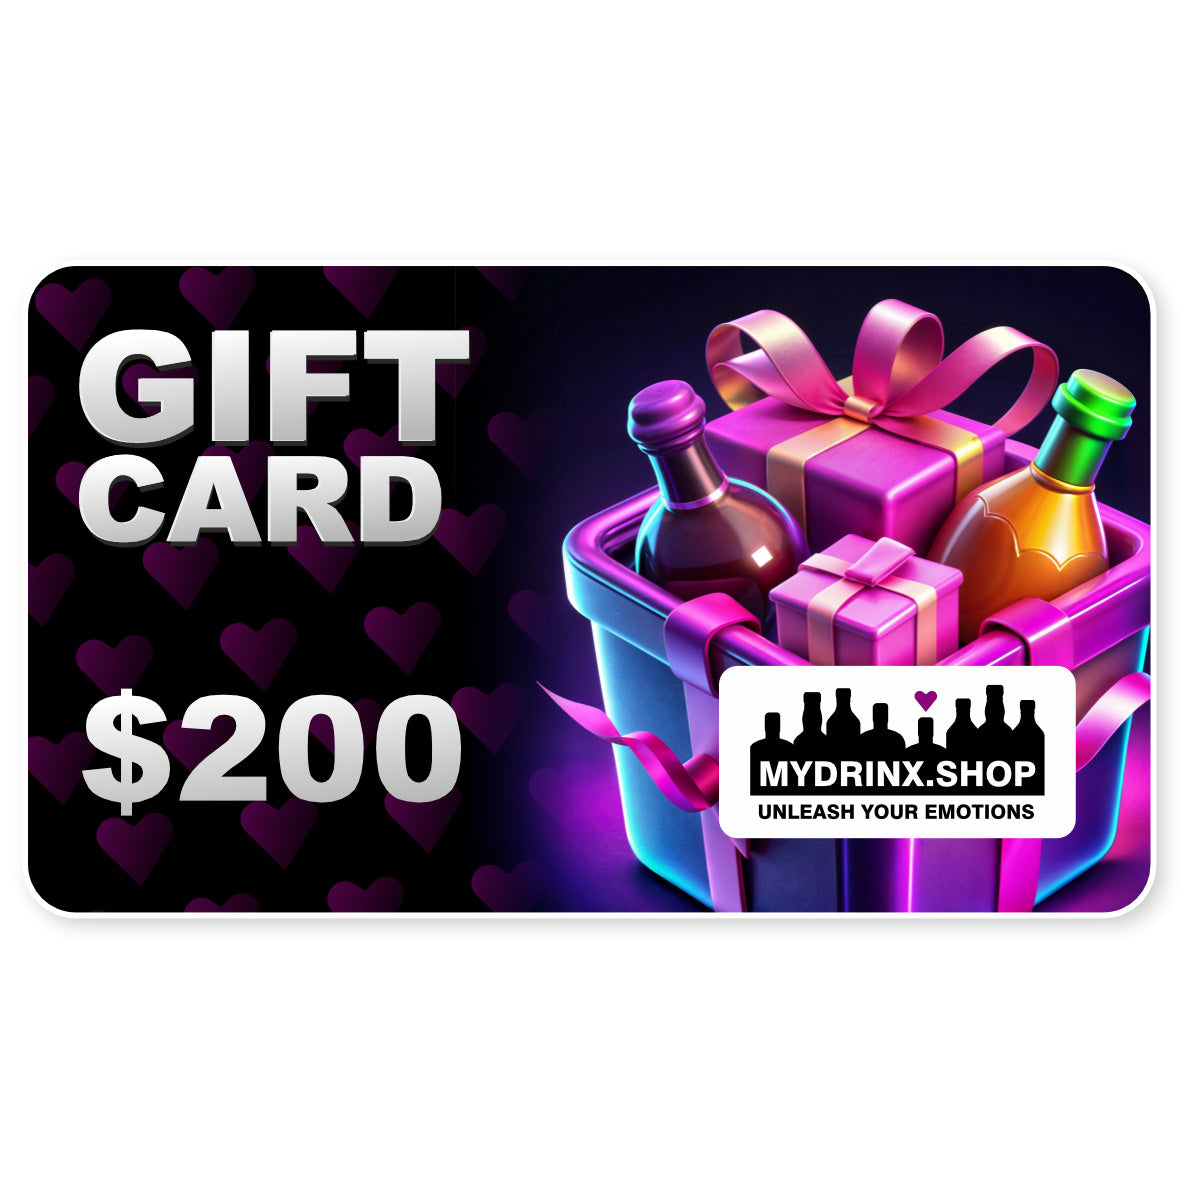 MyDrinx.shop Gift Card $200